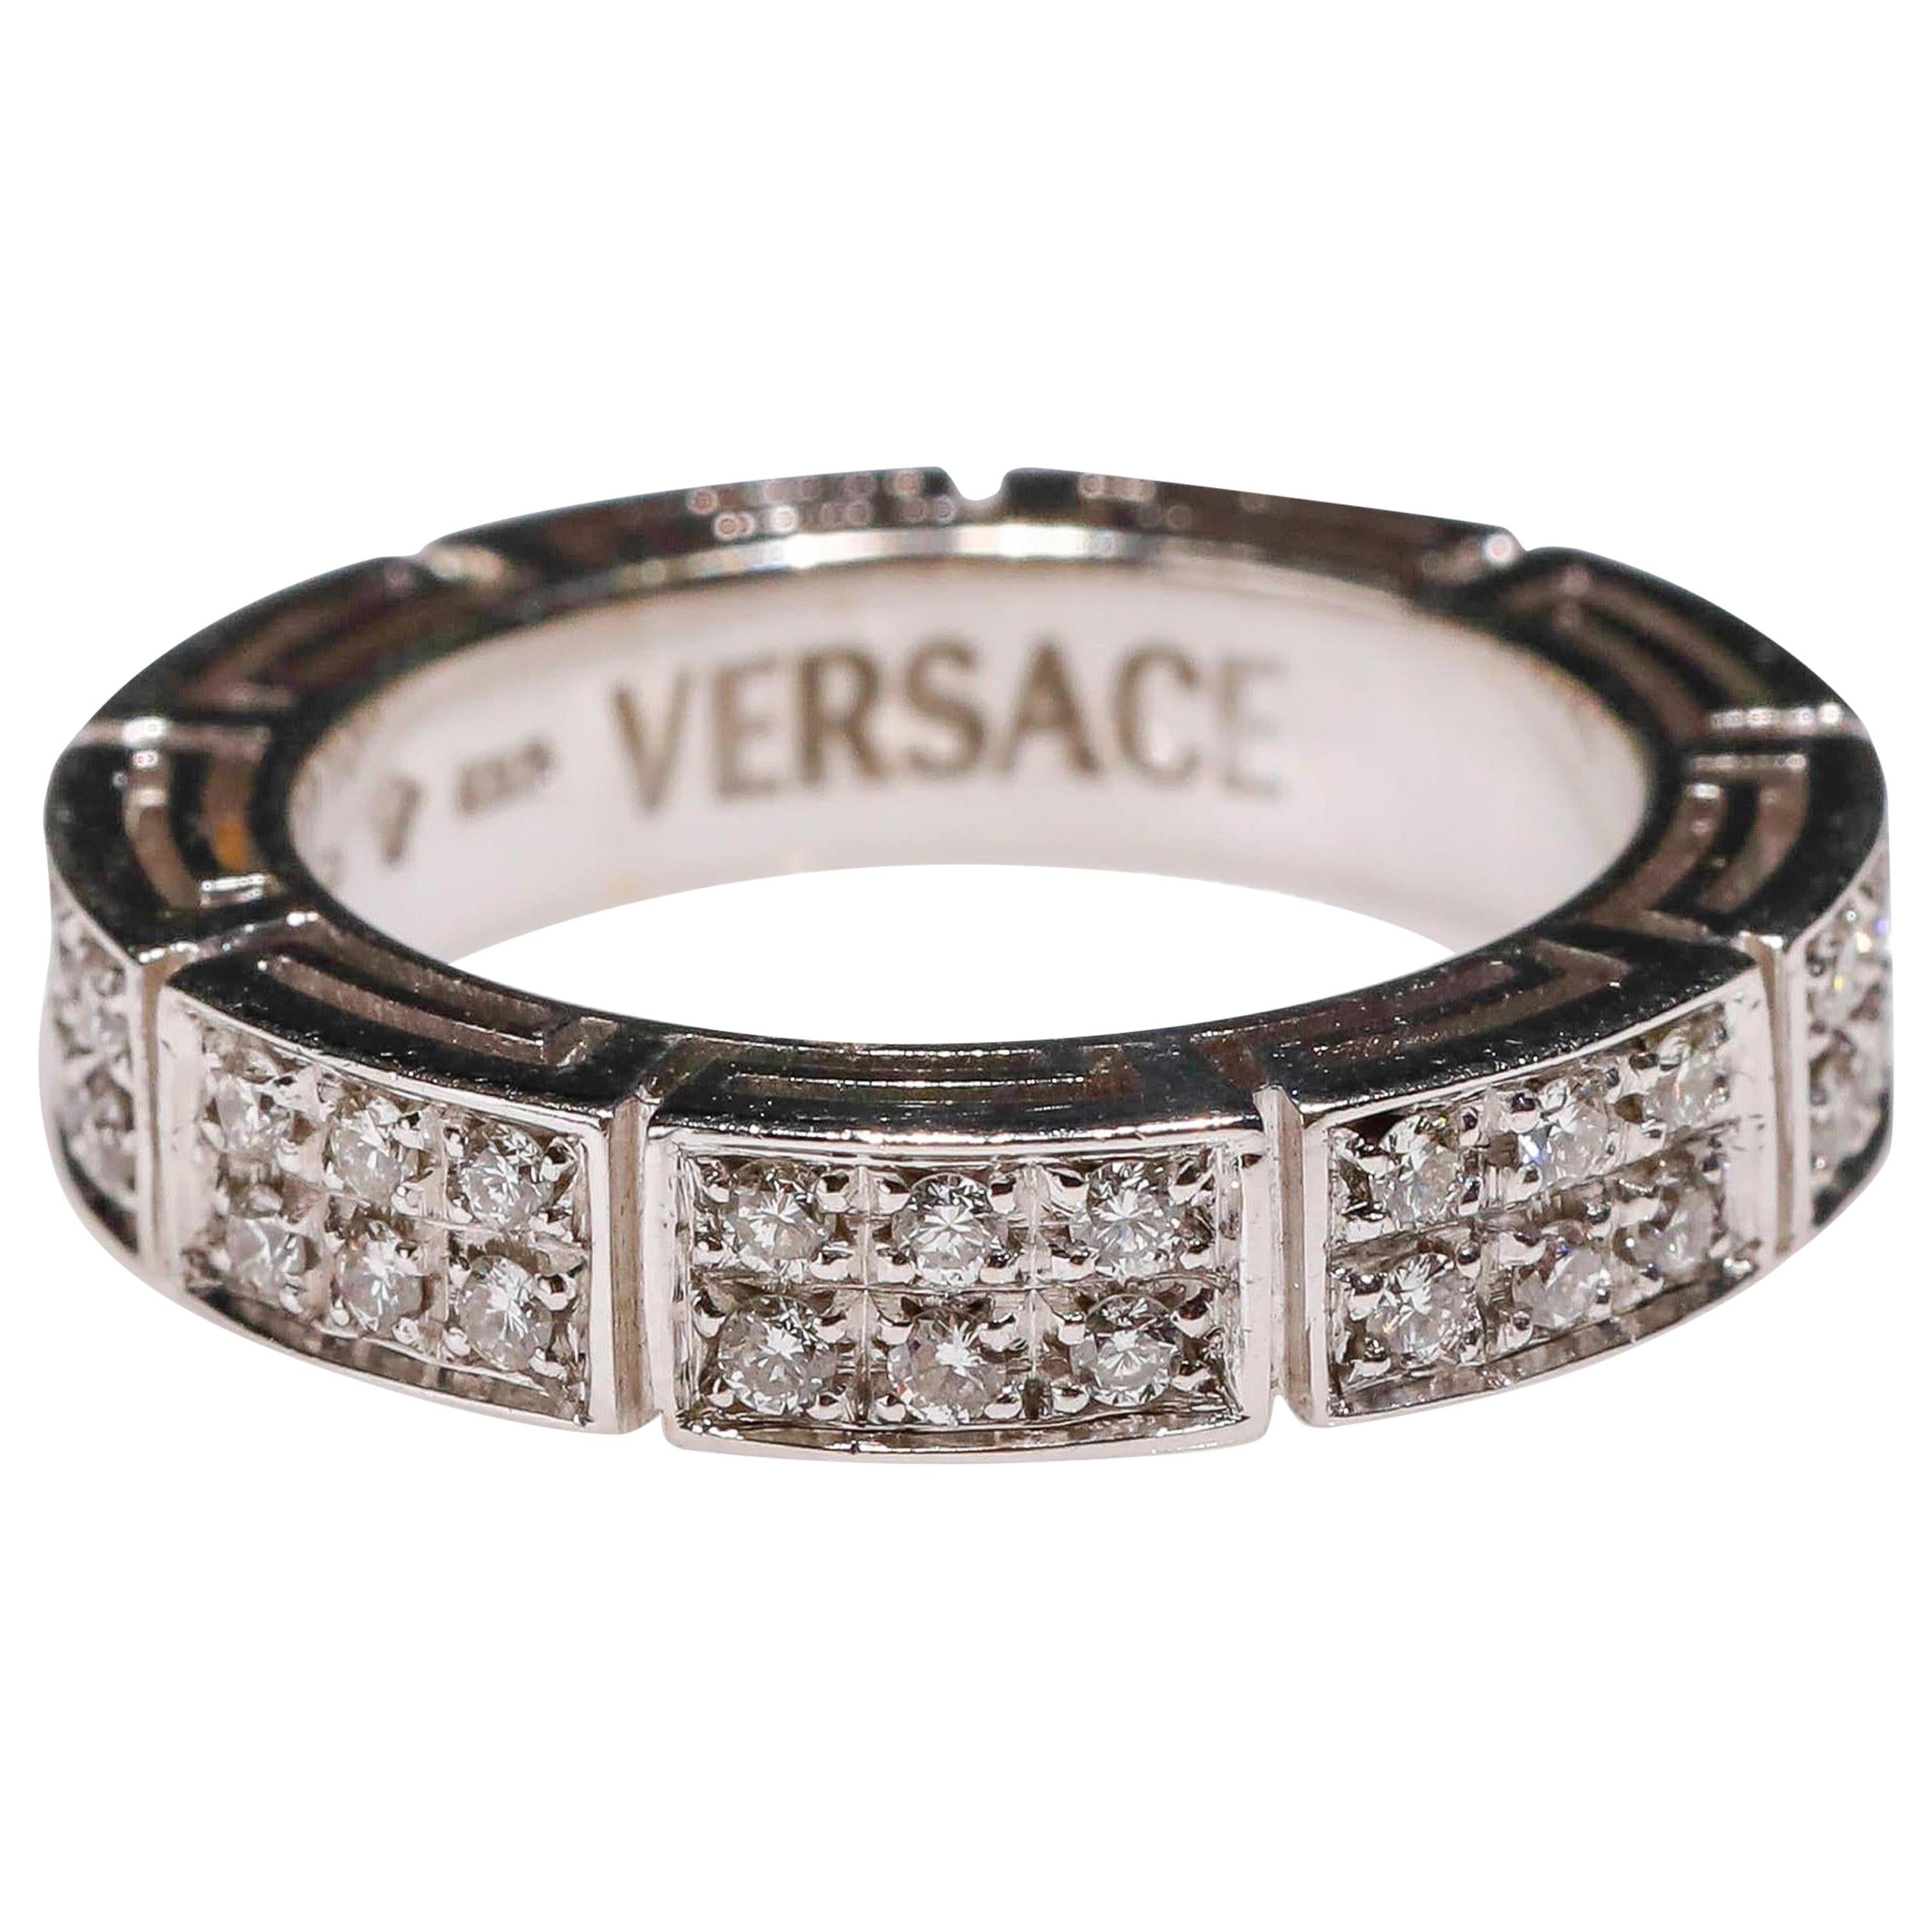 versace band ring